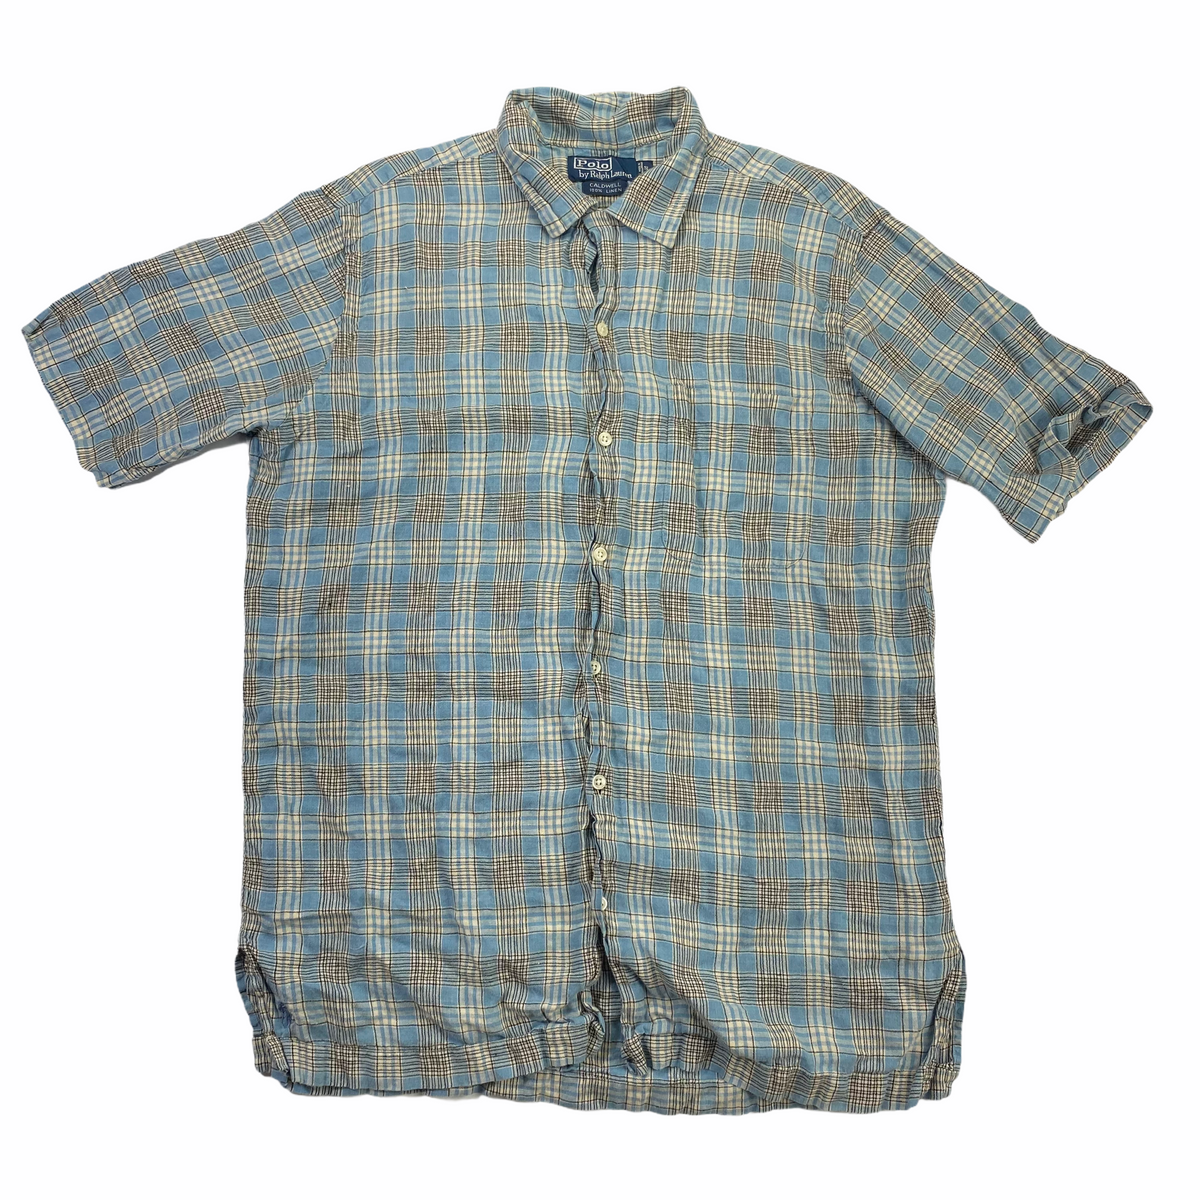 Polo ralph lauren caldwell linen button down shirt Small – Vintage 